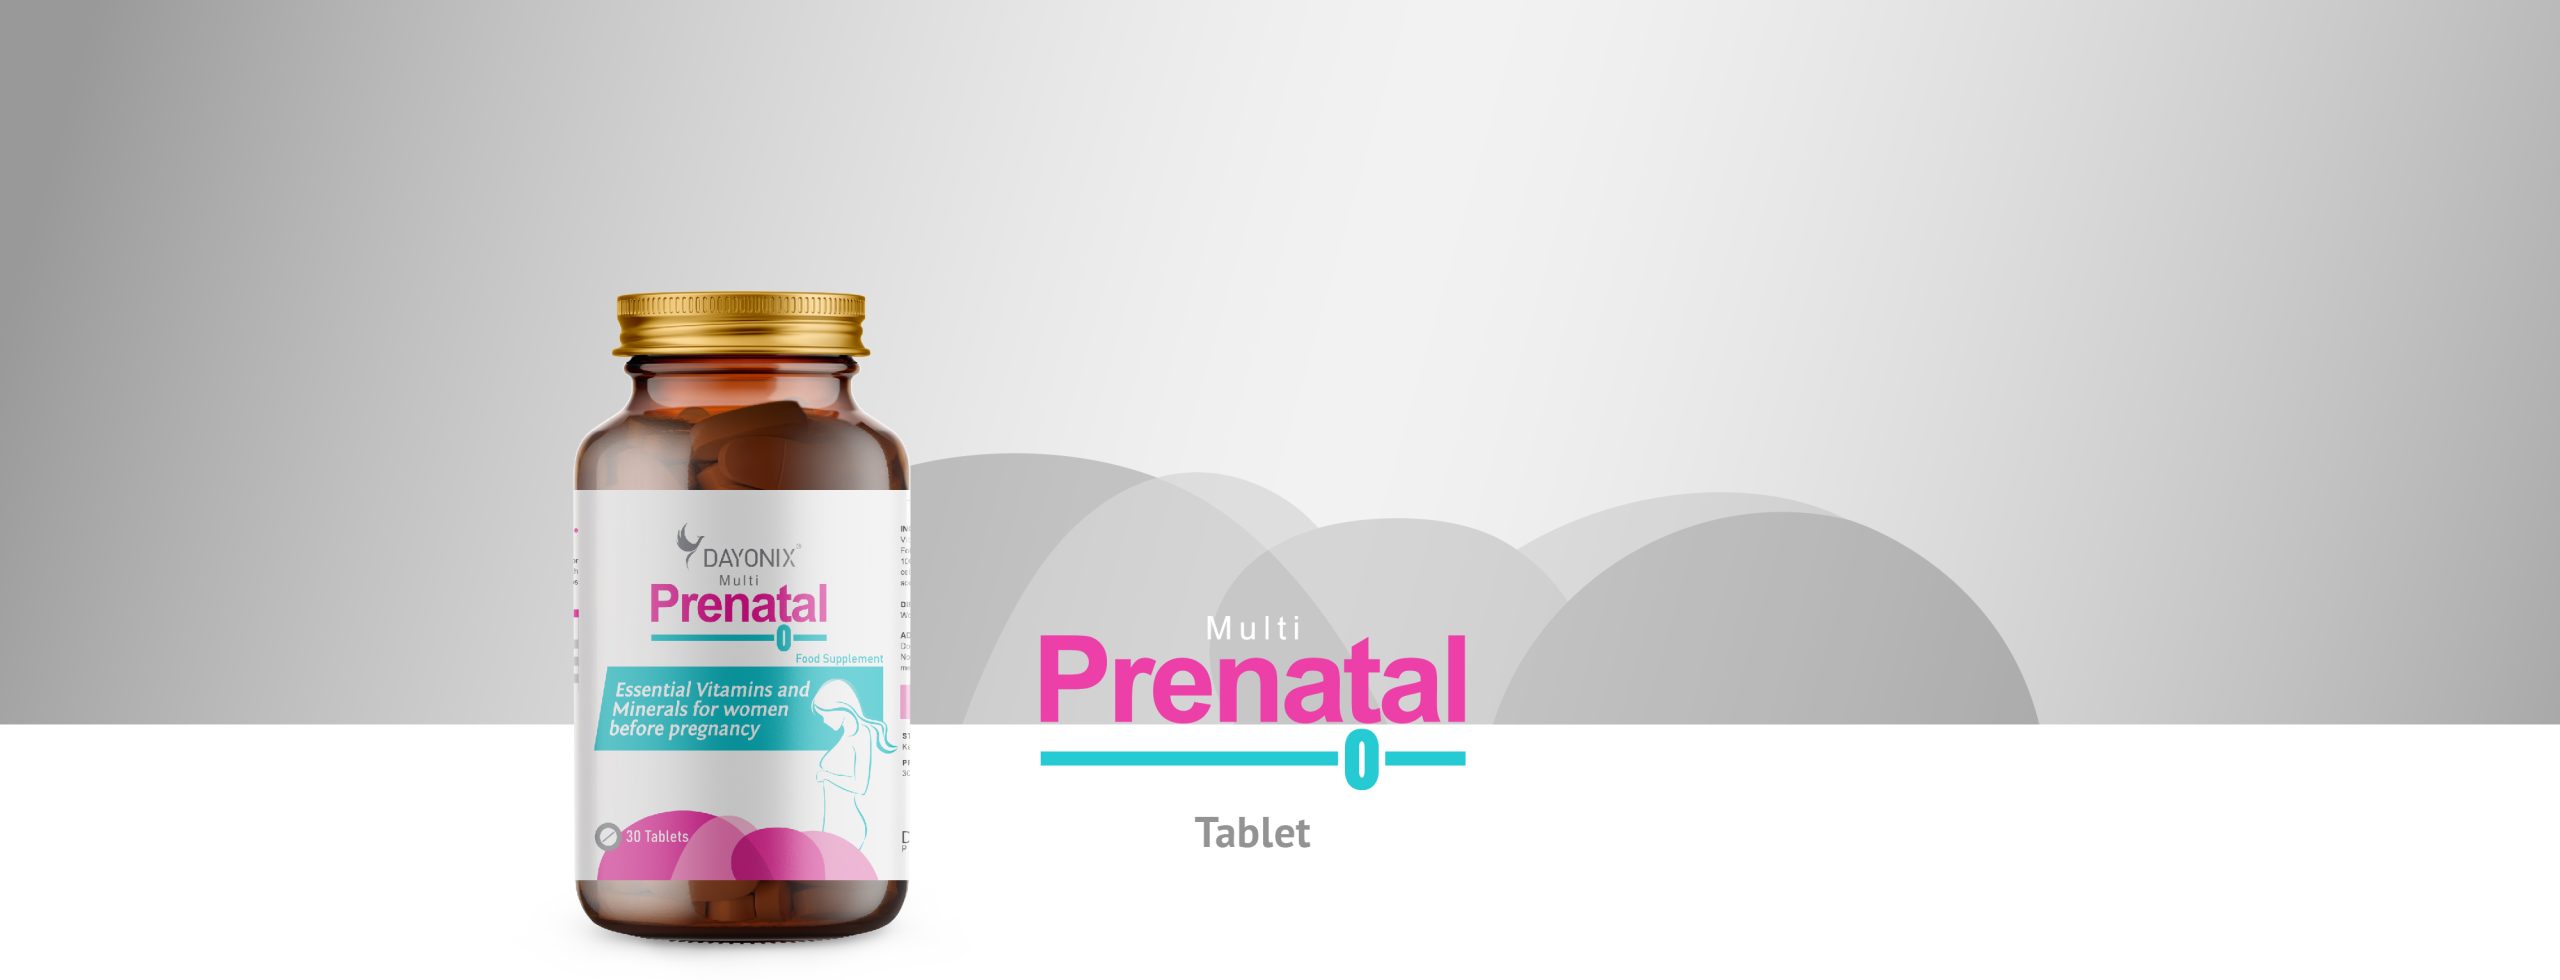 prenatal 0